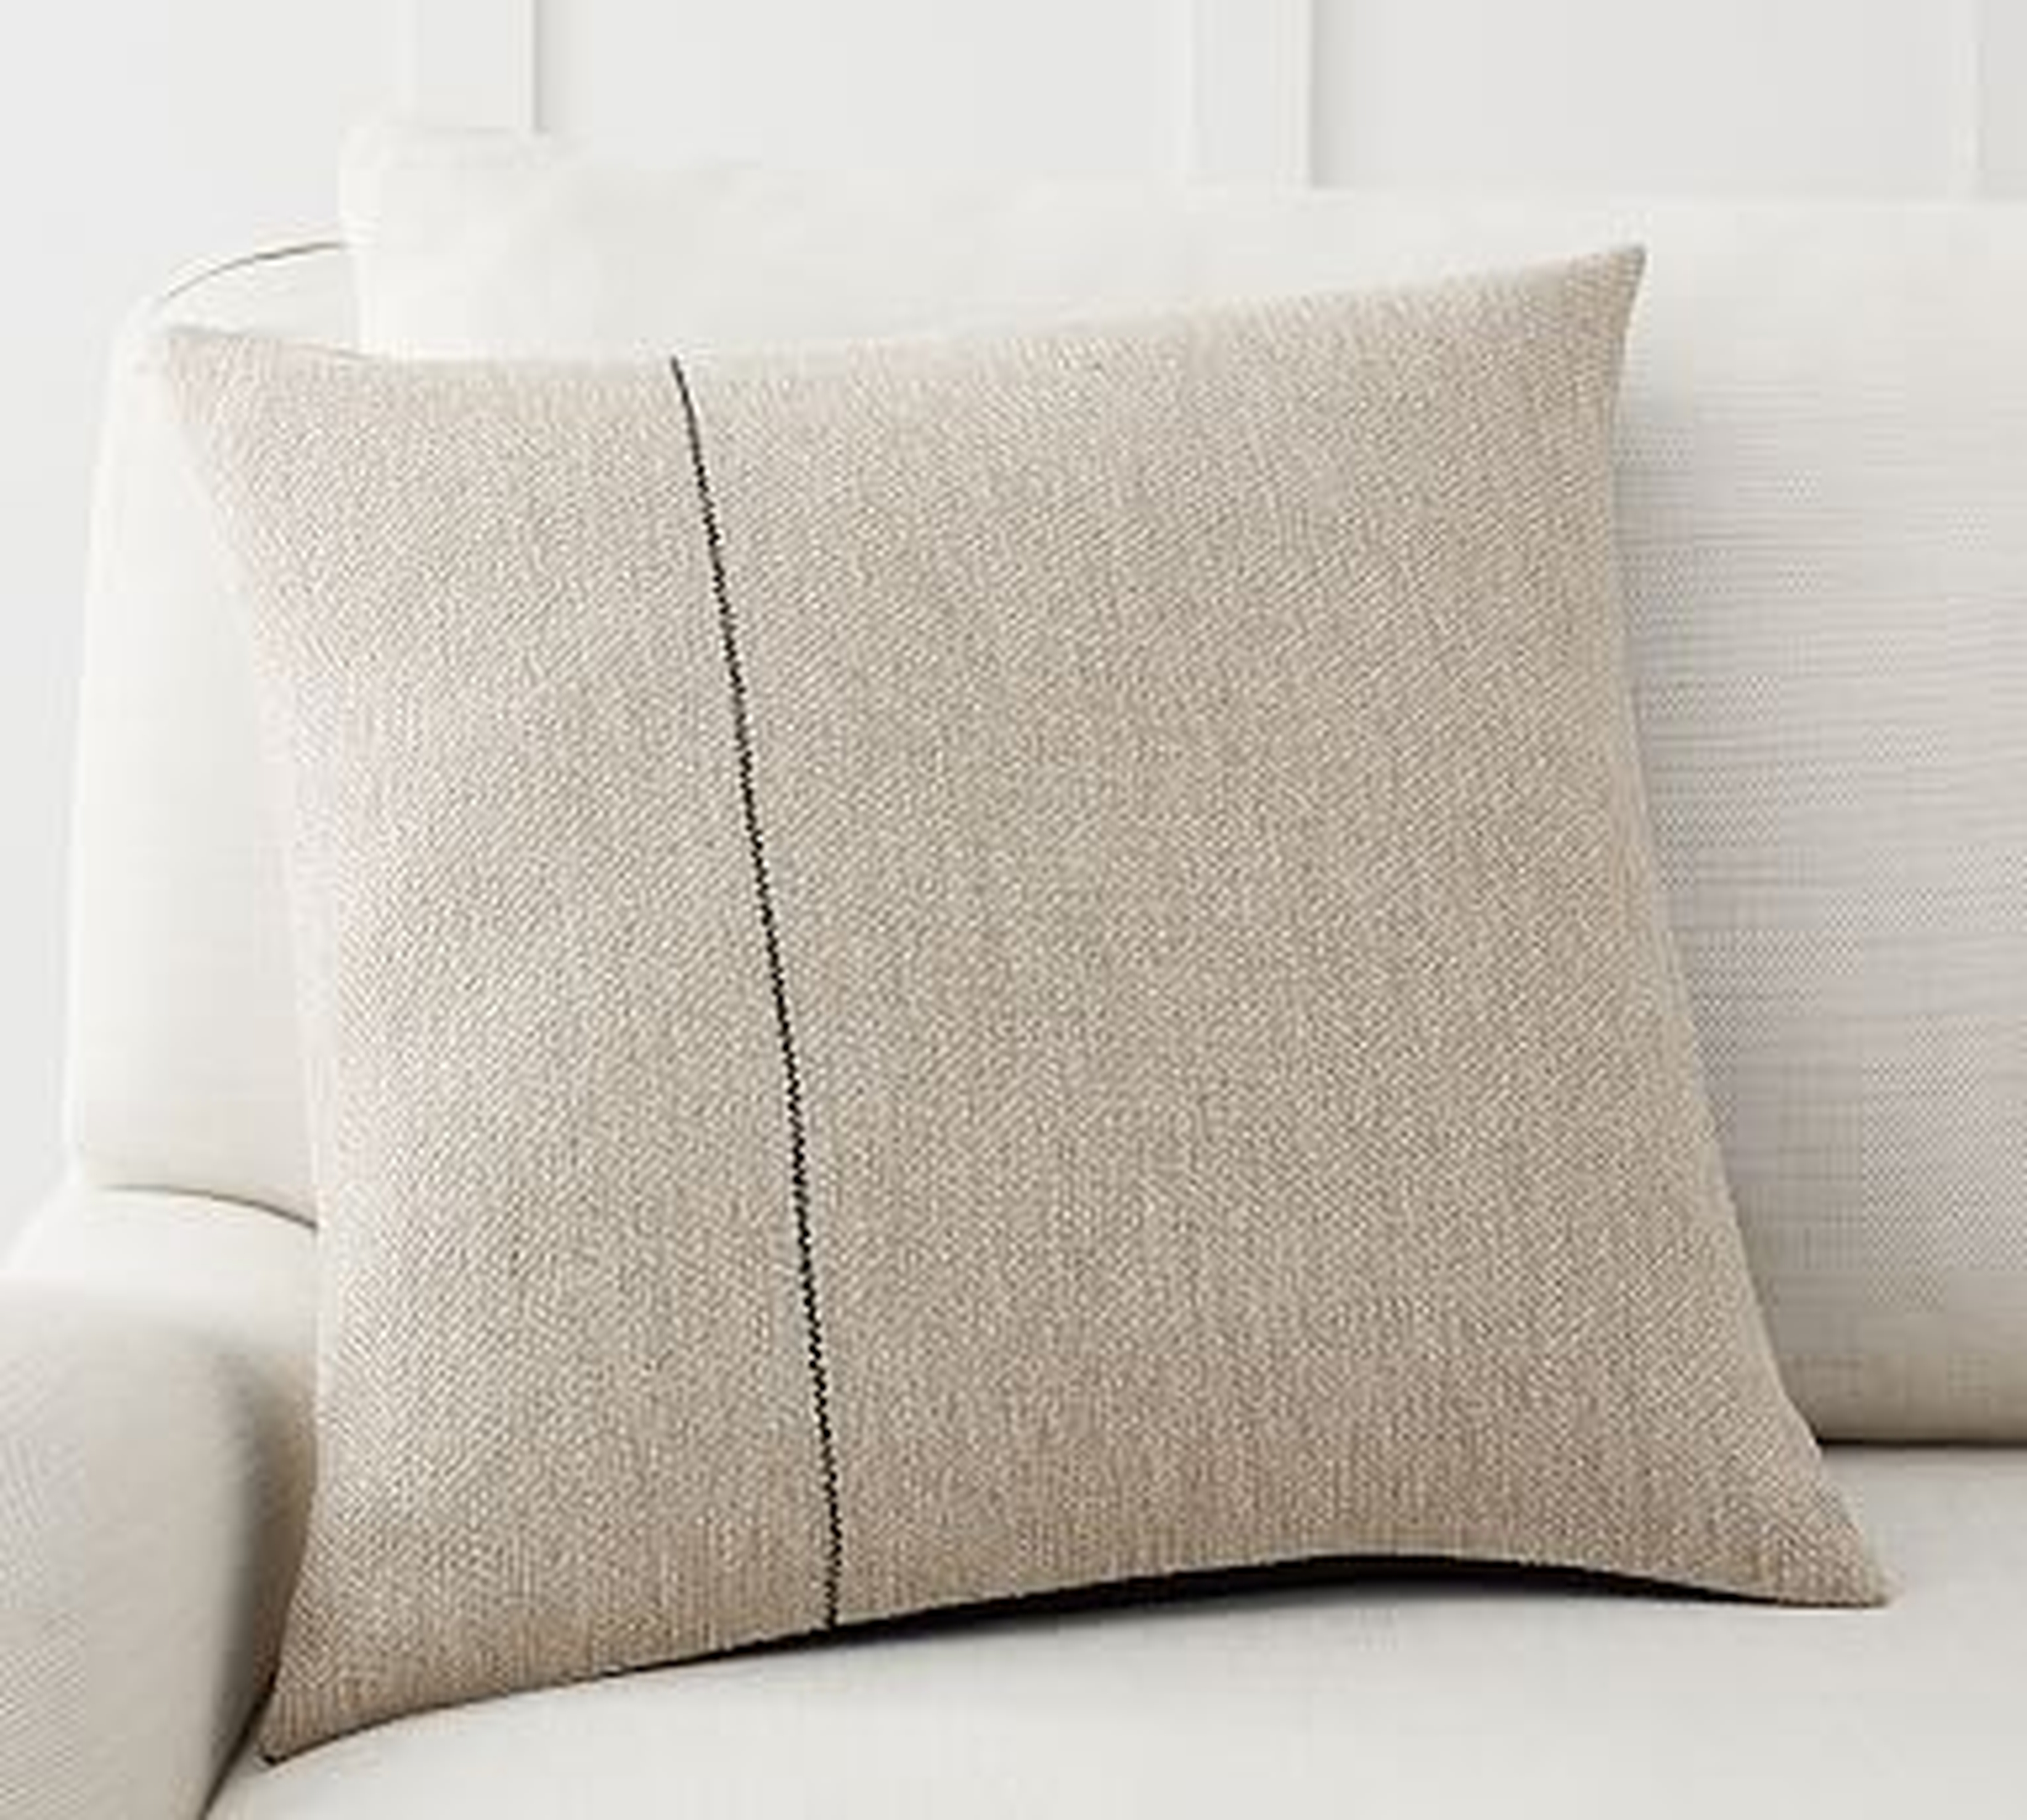 Amada Single Striped Pillow Cover, 18 x 18", Ivory Multi - Pottery Barn